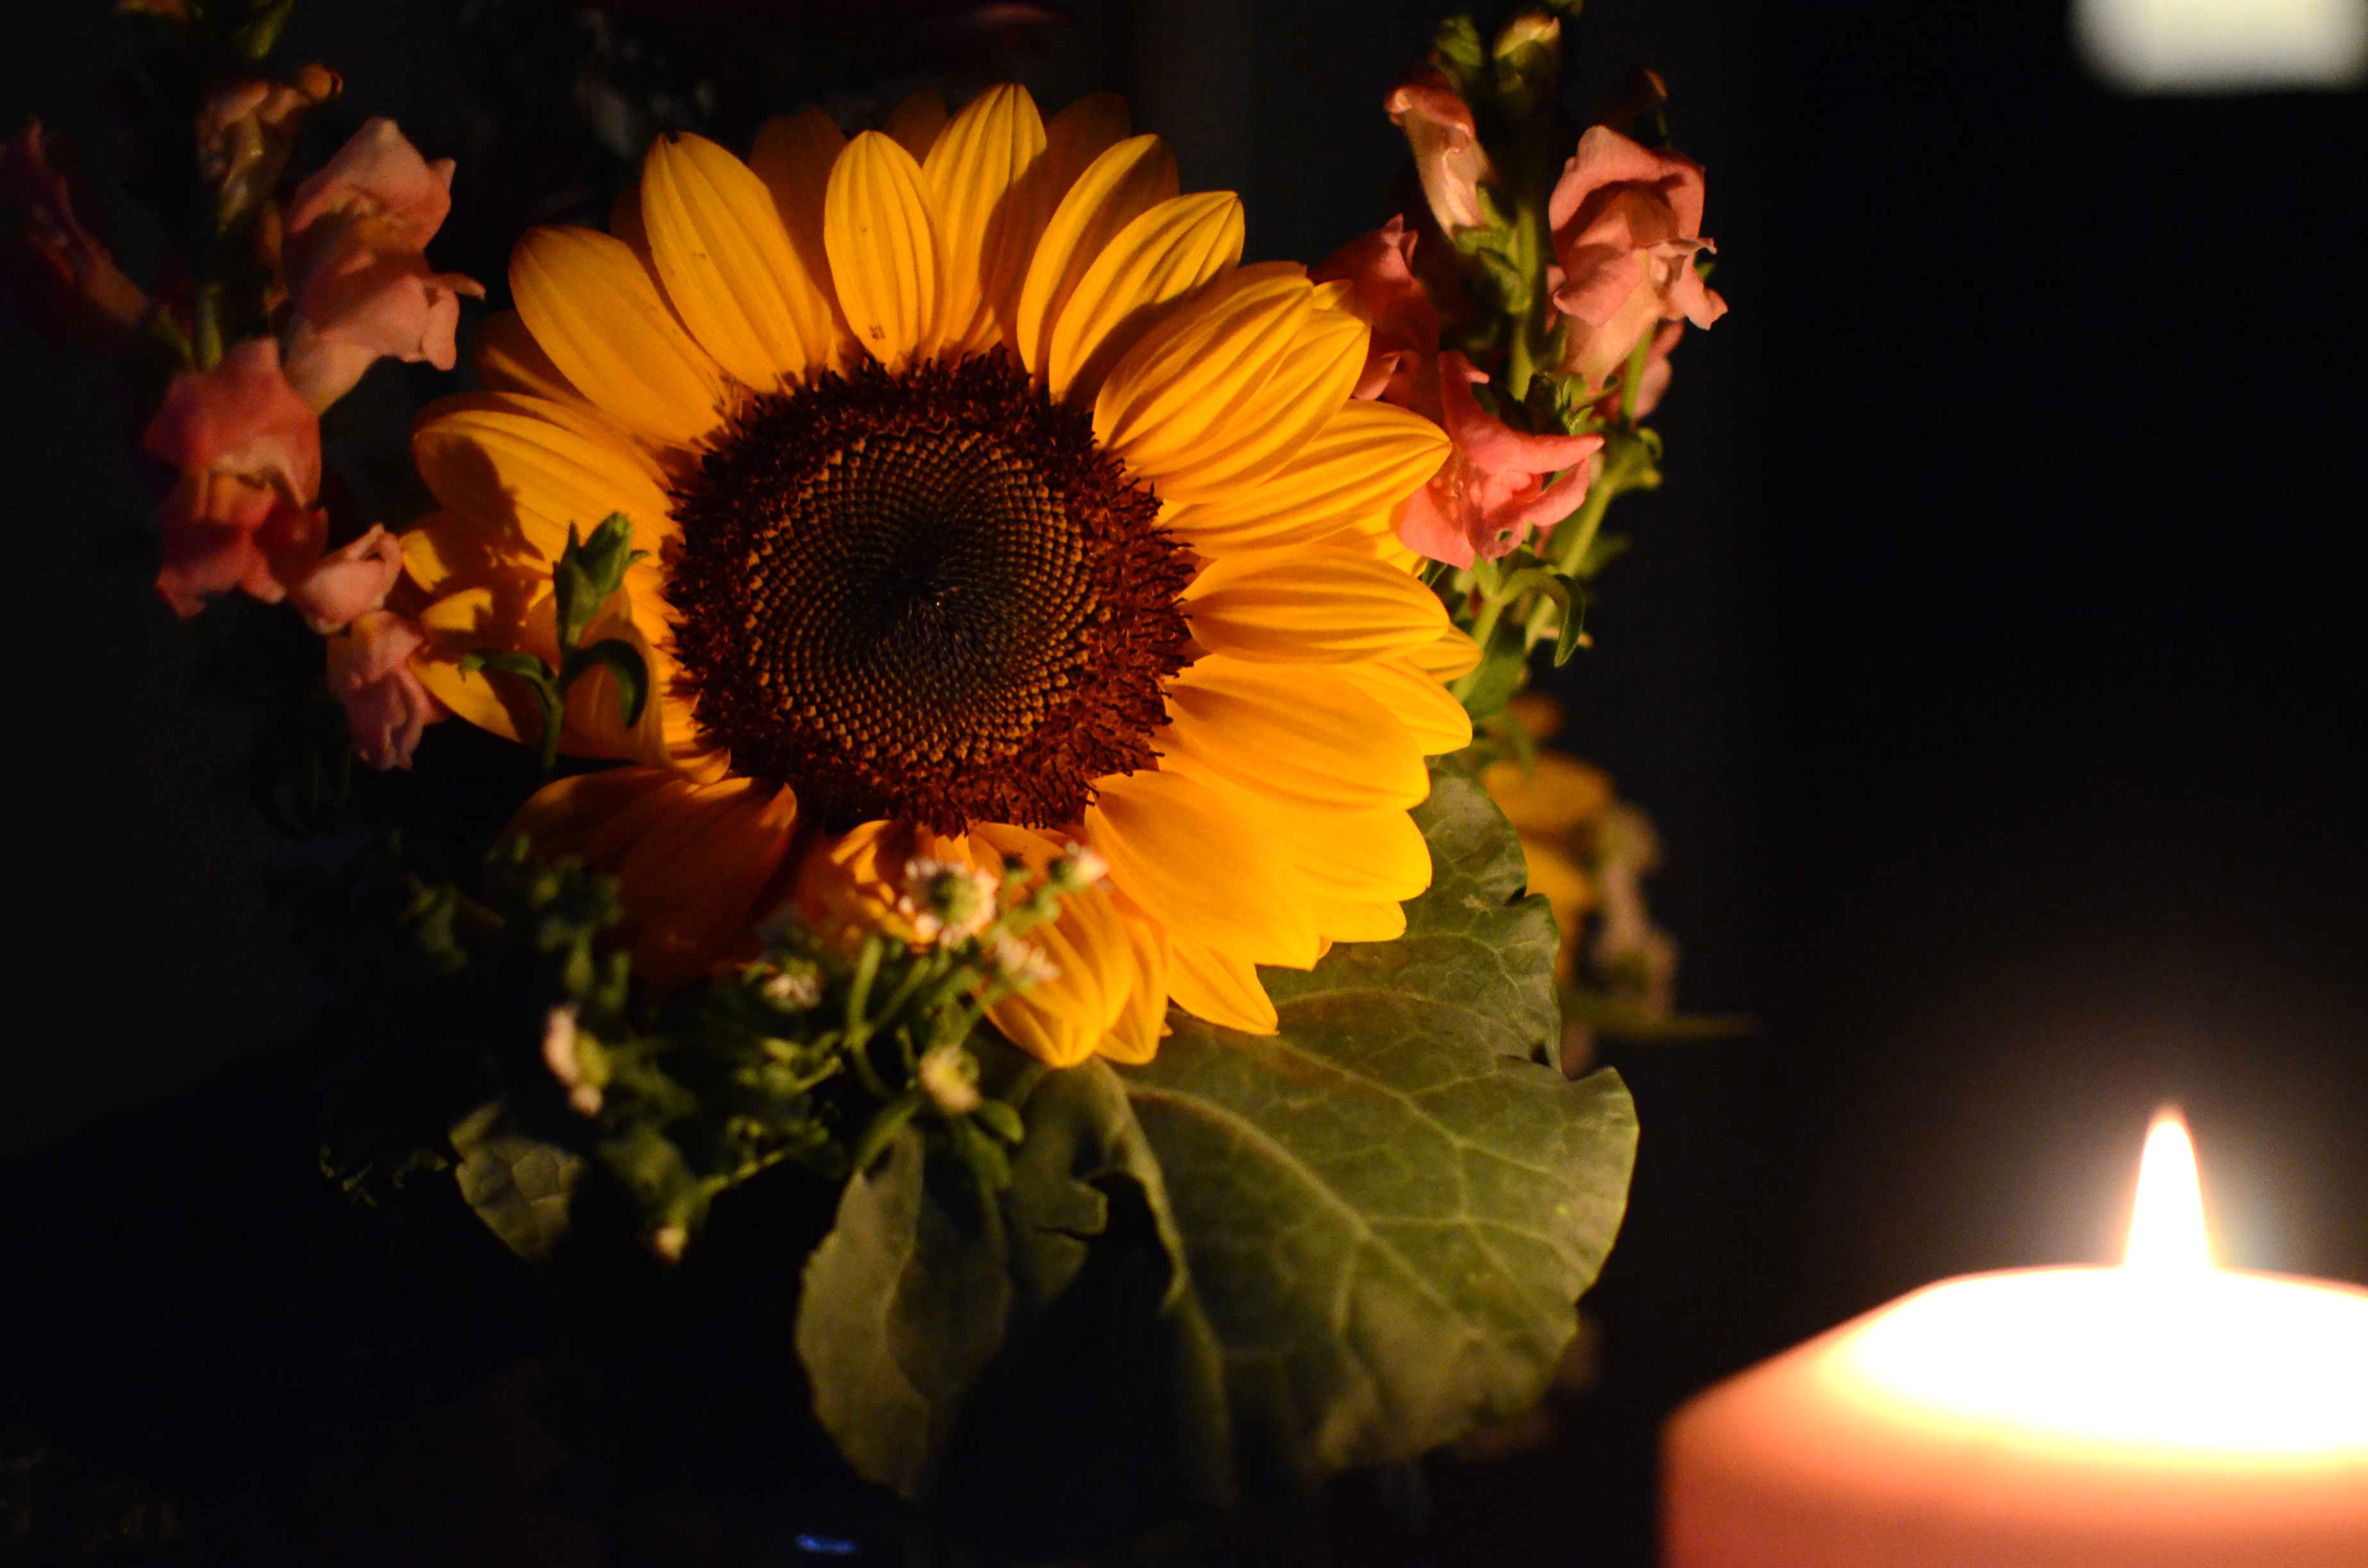 Flowers lit in chiaroscuro lighting.